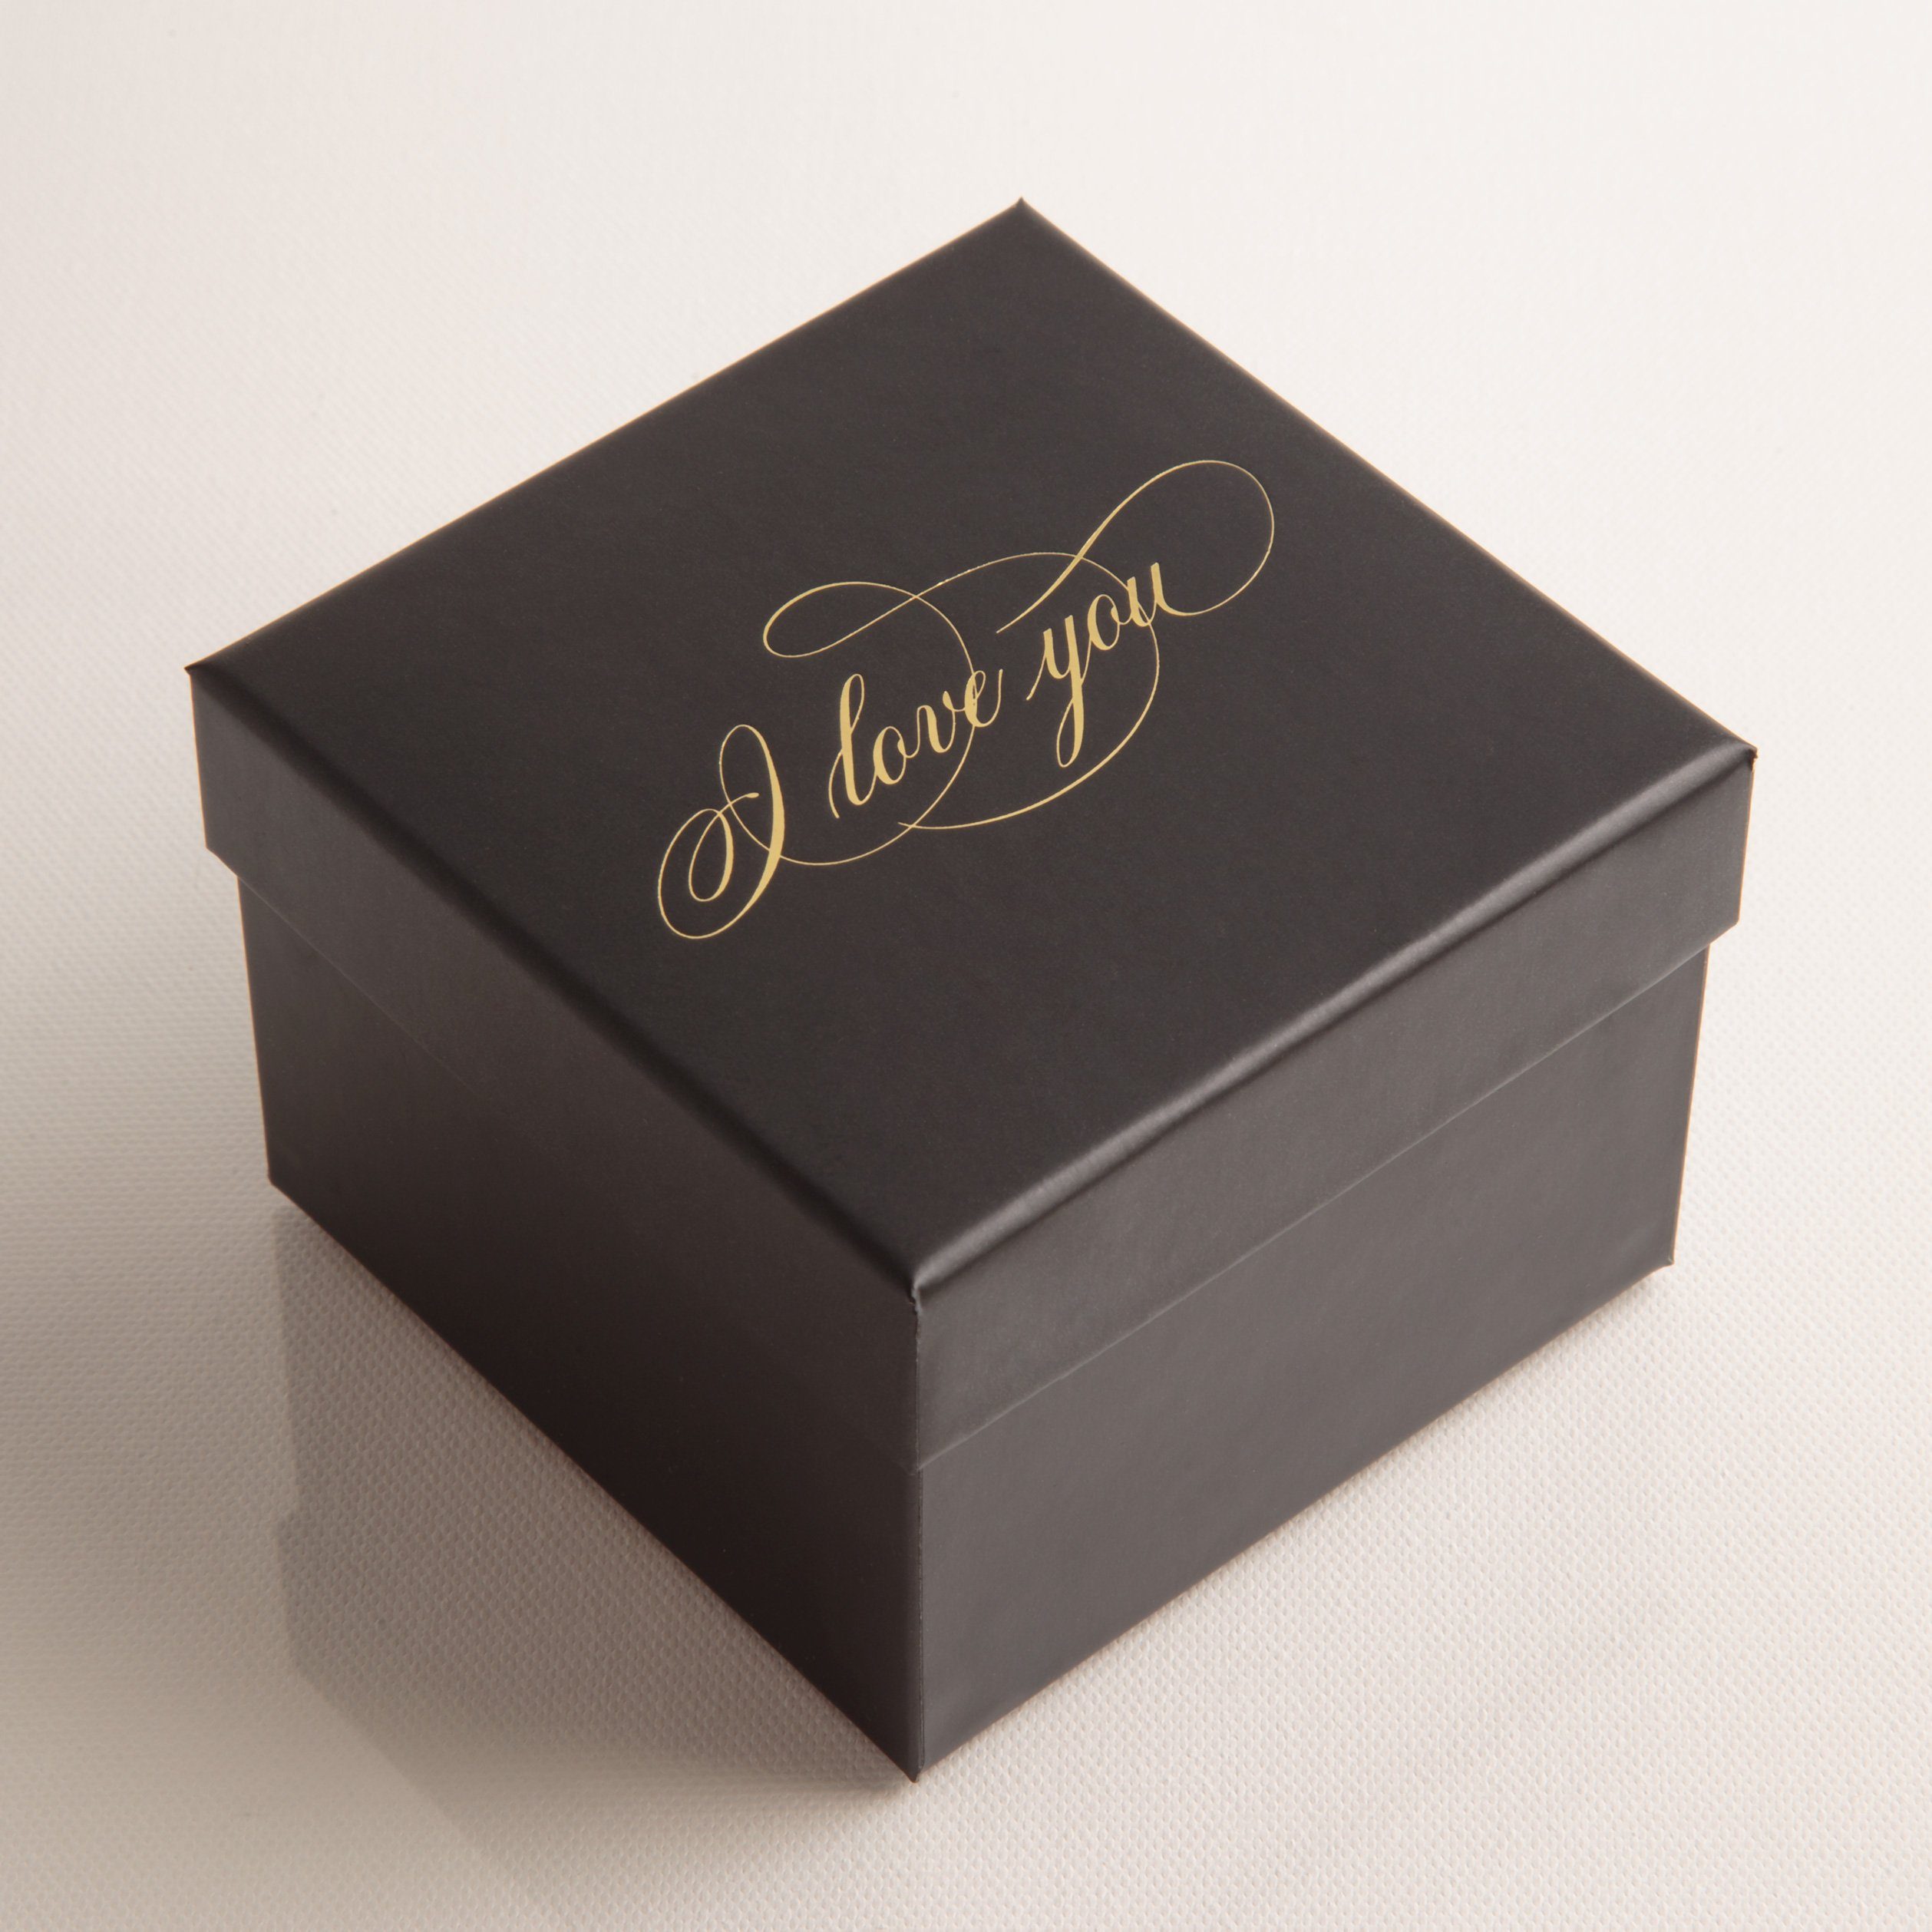 Kunstblume Infinity Rose Box I Höhe konserviert Love You Rose, Rose Heidelberg, Rosa 6 cm, SCHULZ Echte ROSEMARIE Liebesbeweis Idee Geschenk